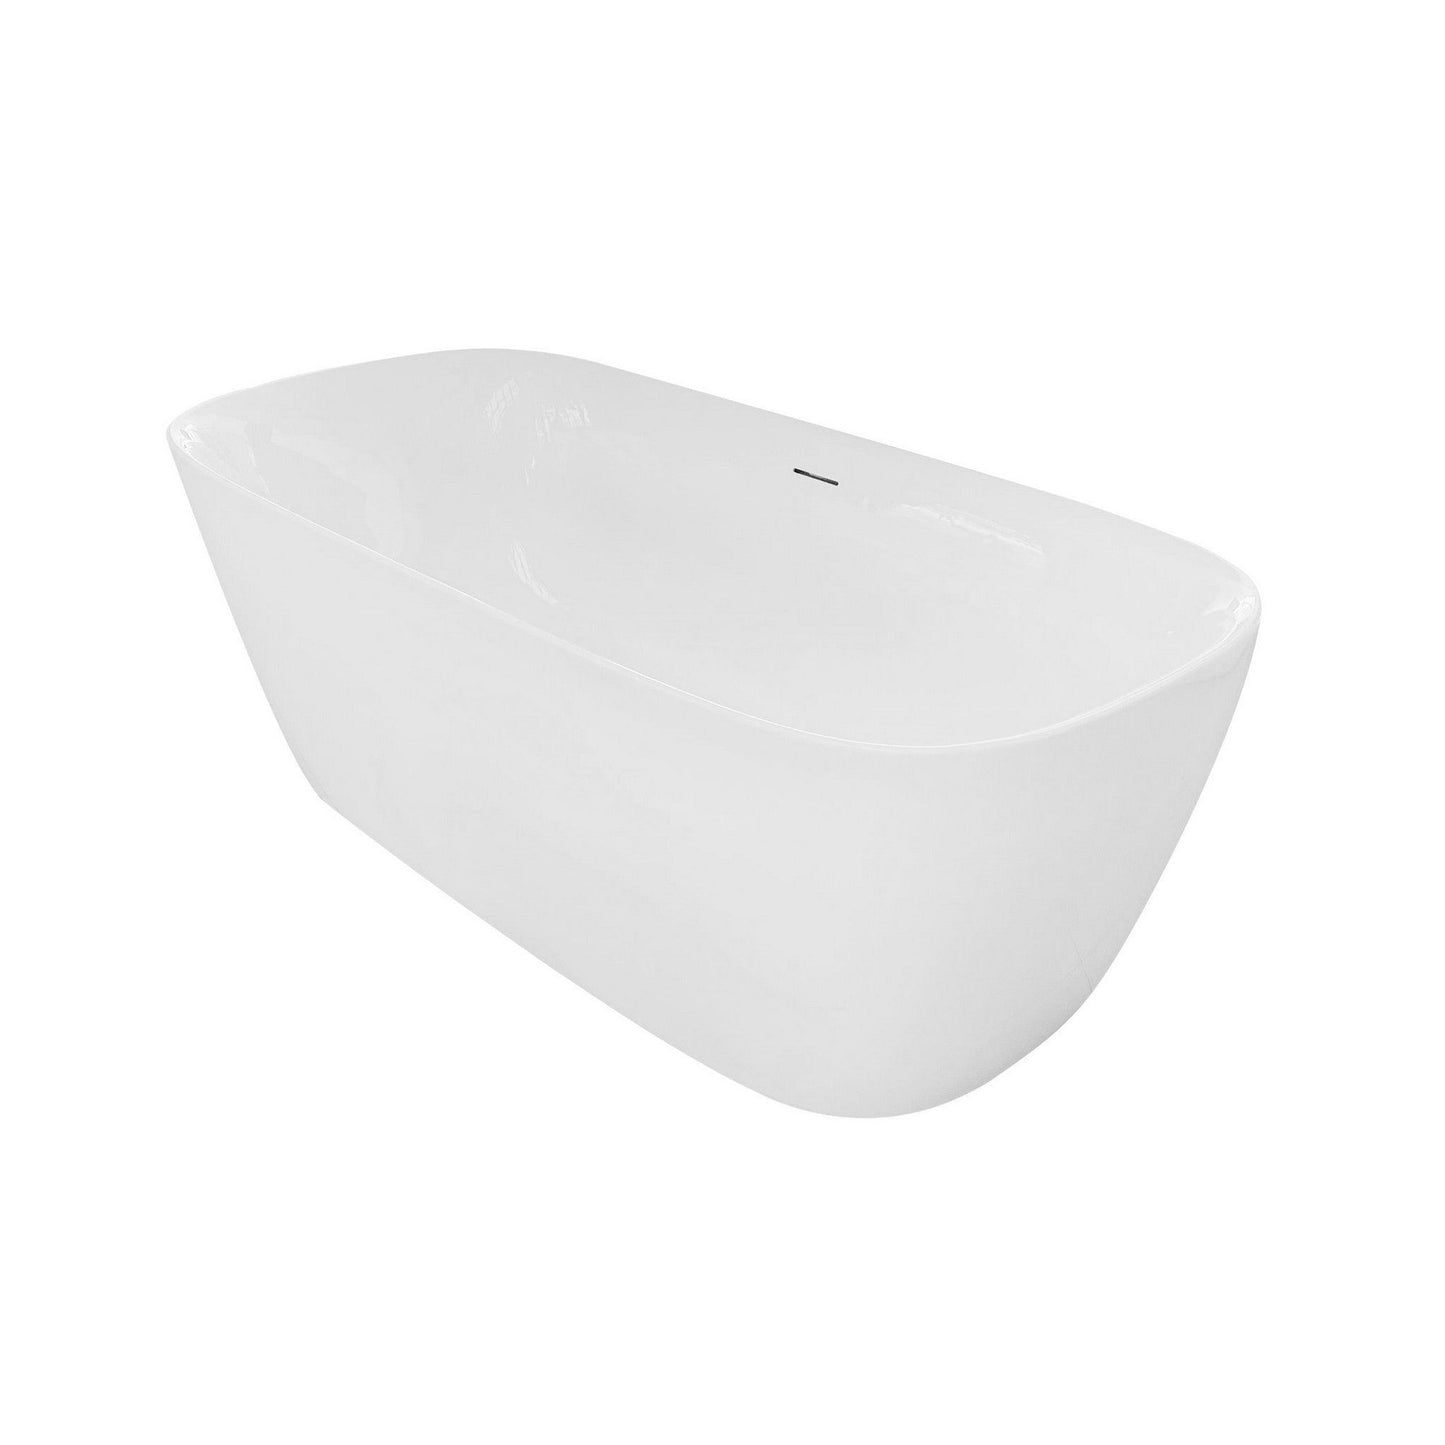 Ratel 67" x 32" Oval White Gloss Acrylic Freestanding Bathtub